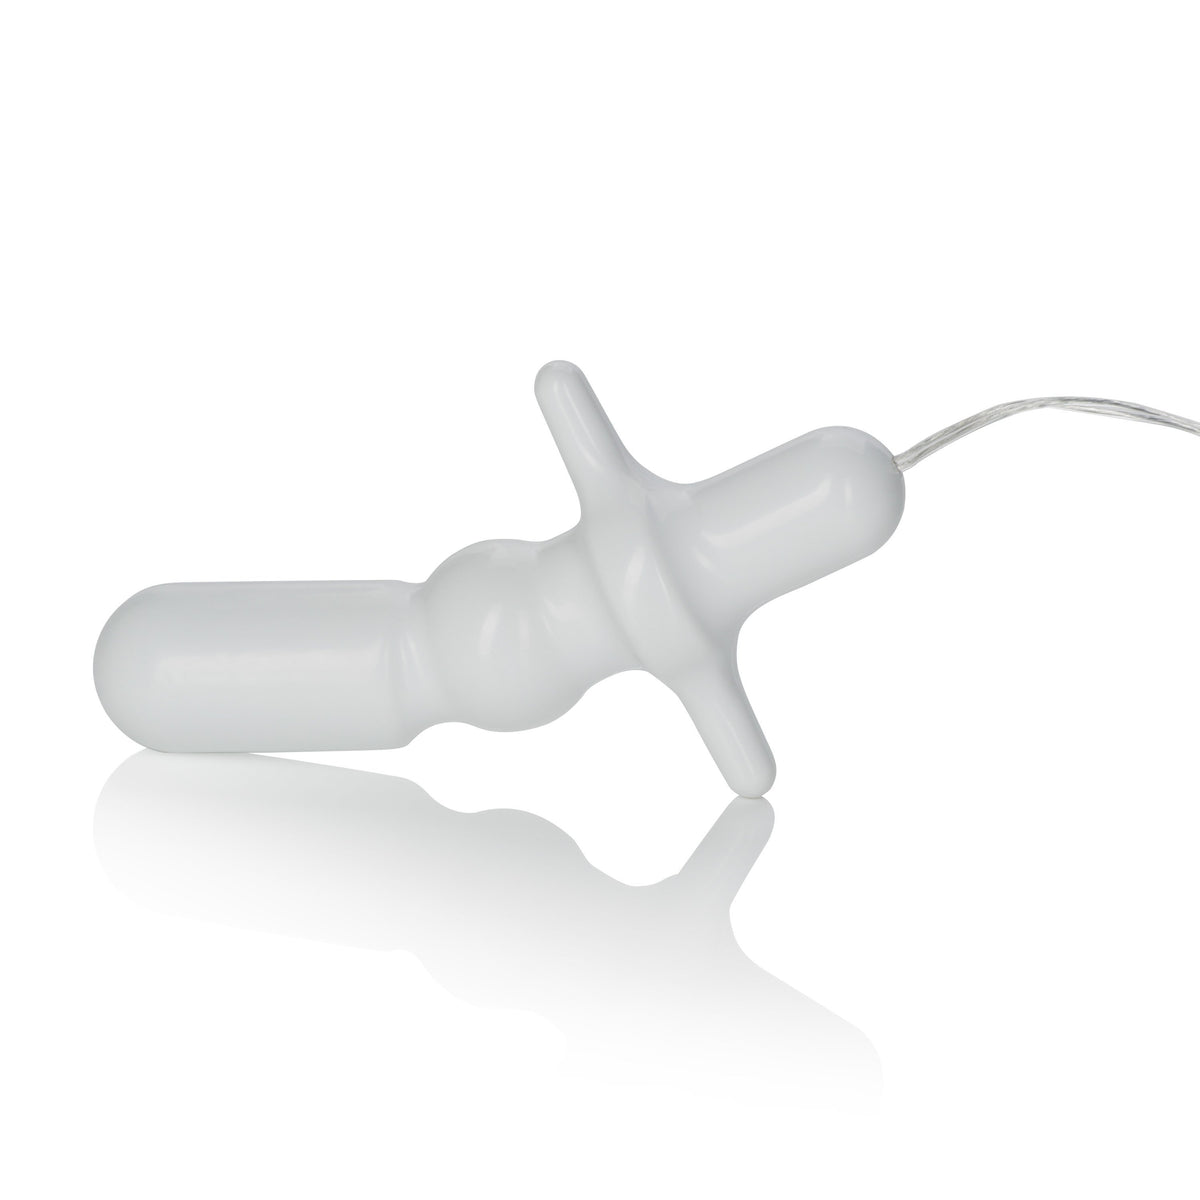 California Exotics - Pocket Exotics Vibrating Anal T Vibrator (White) CE1641 CherryAffairs